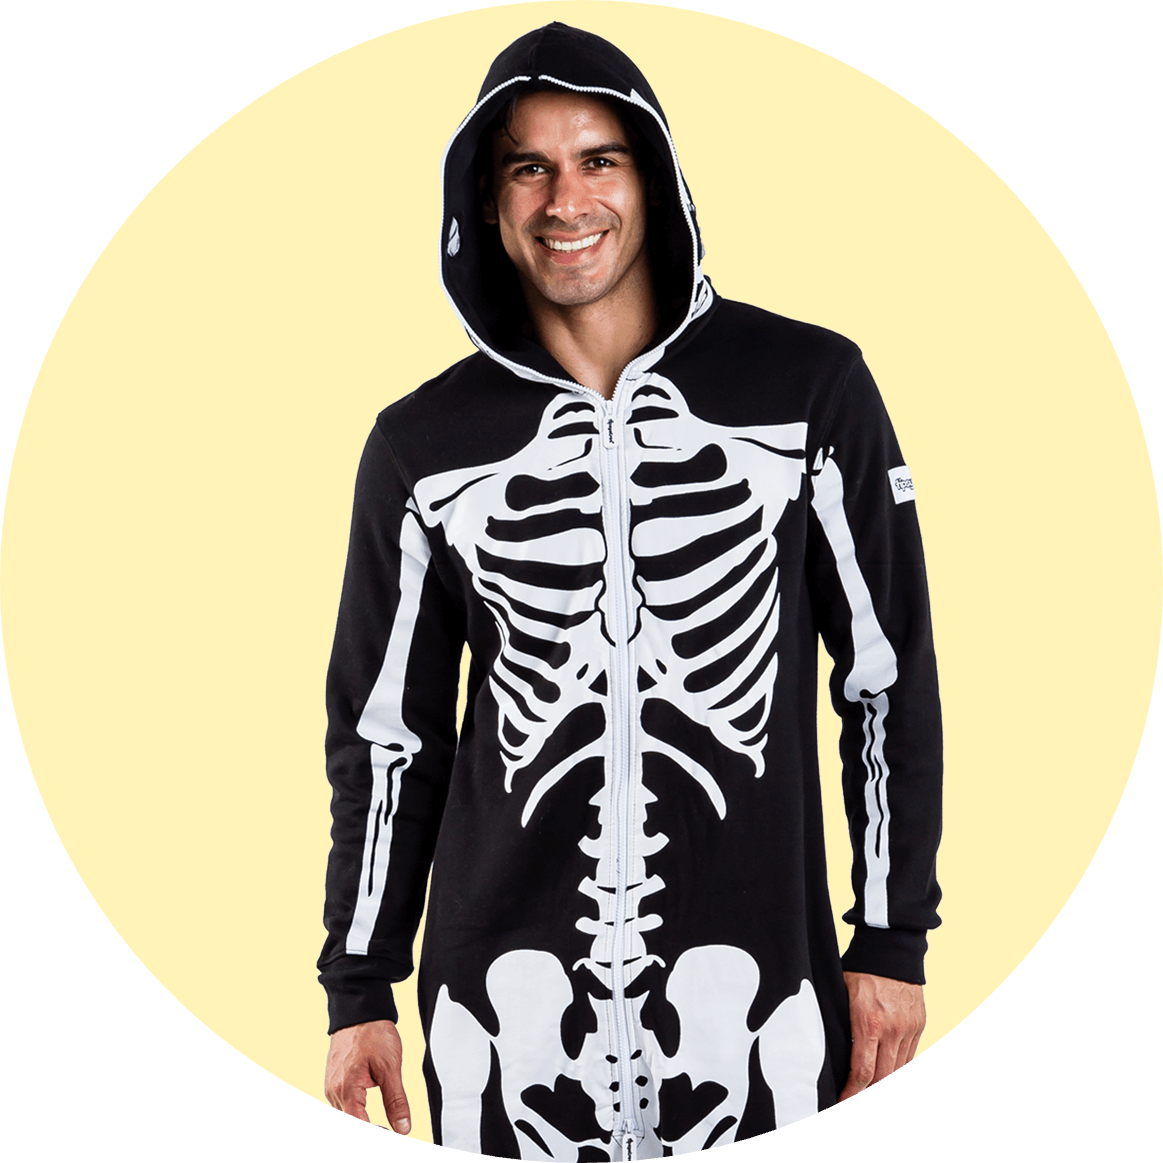 shop skeleton costumes - image of model wearing men's skeleton costume